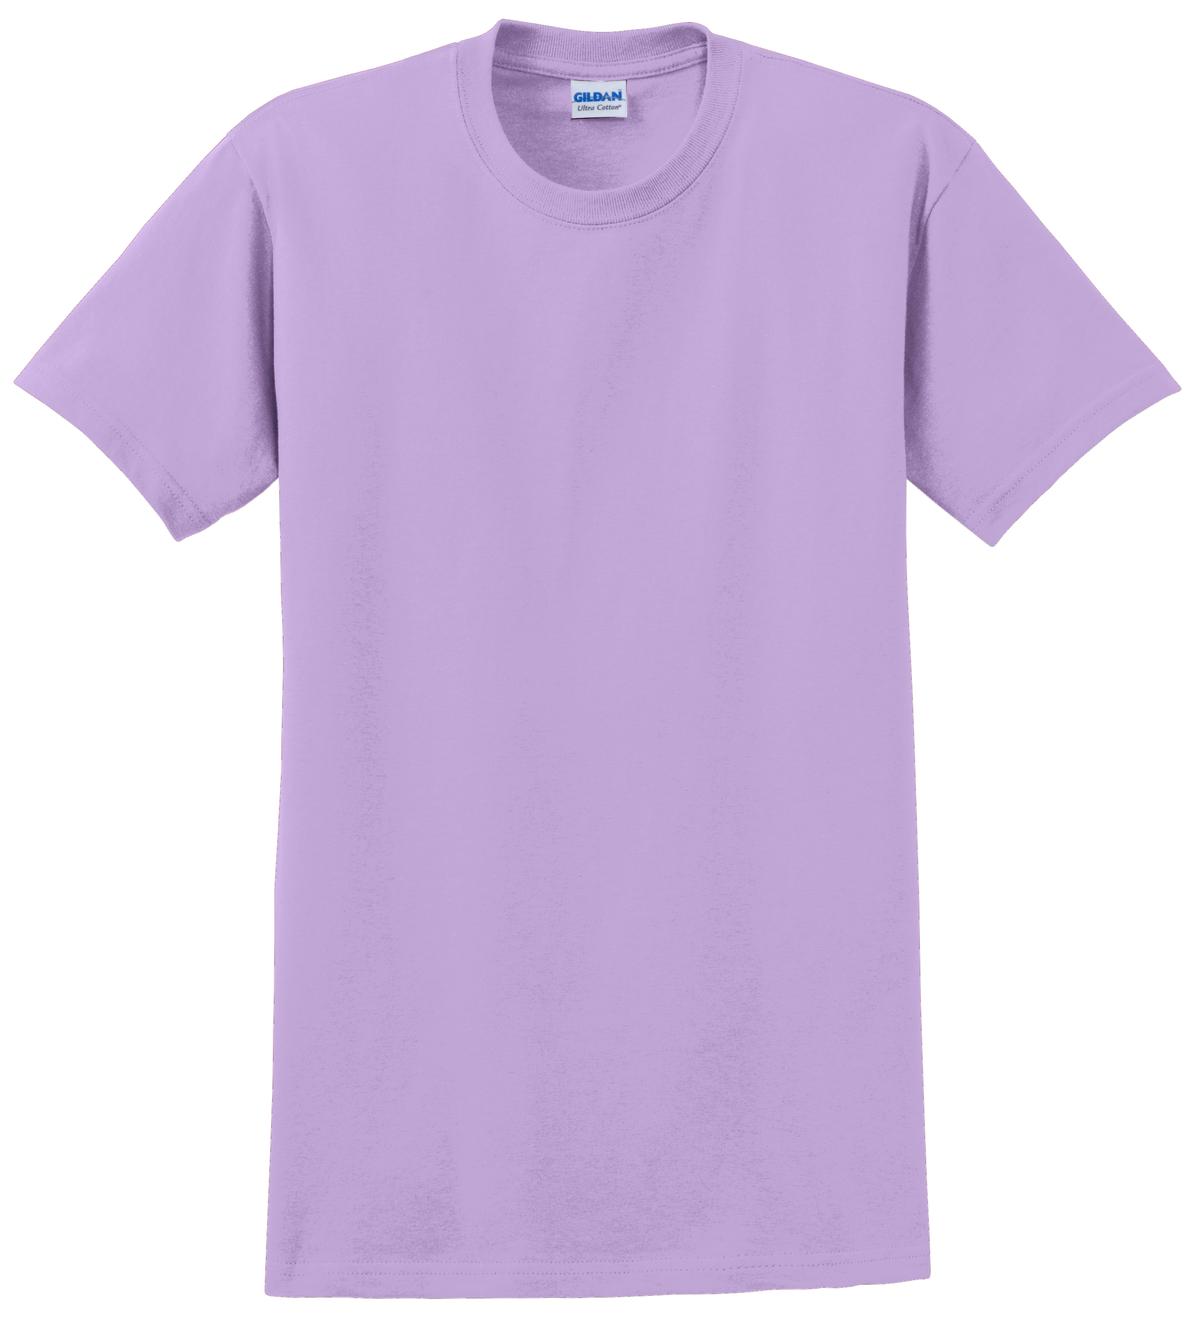 Gildan Ultra Cotton Ladies T Shirt Size Chart